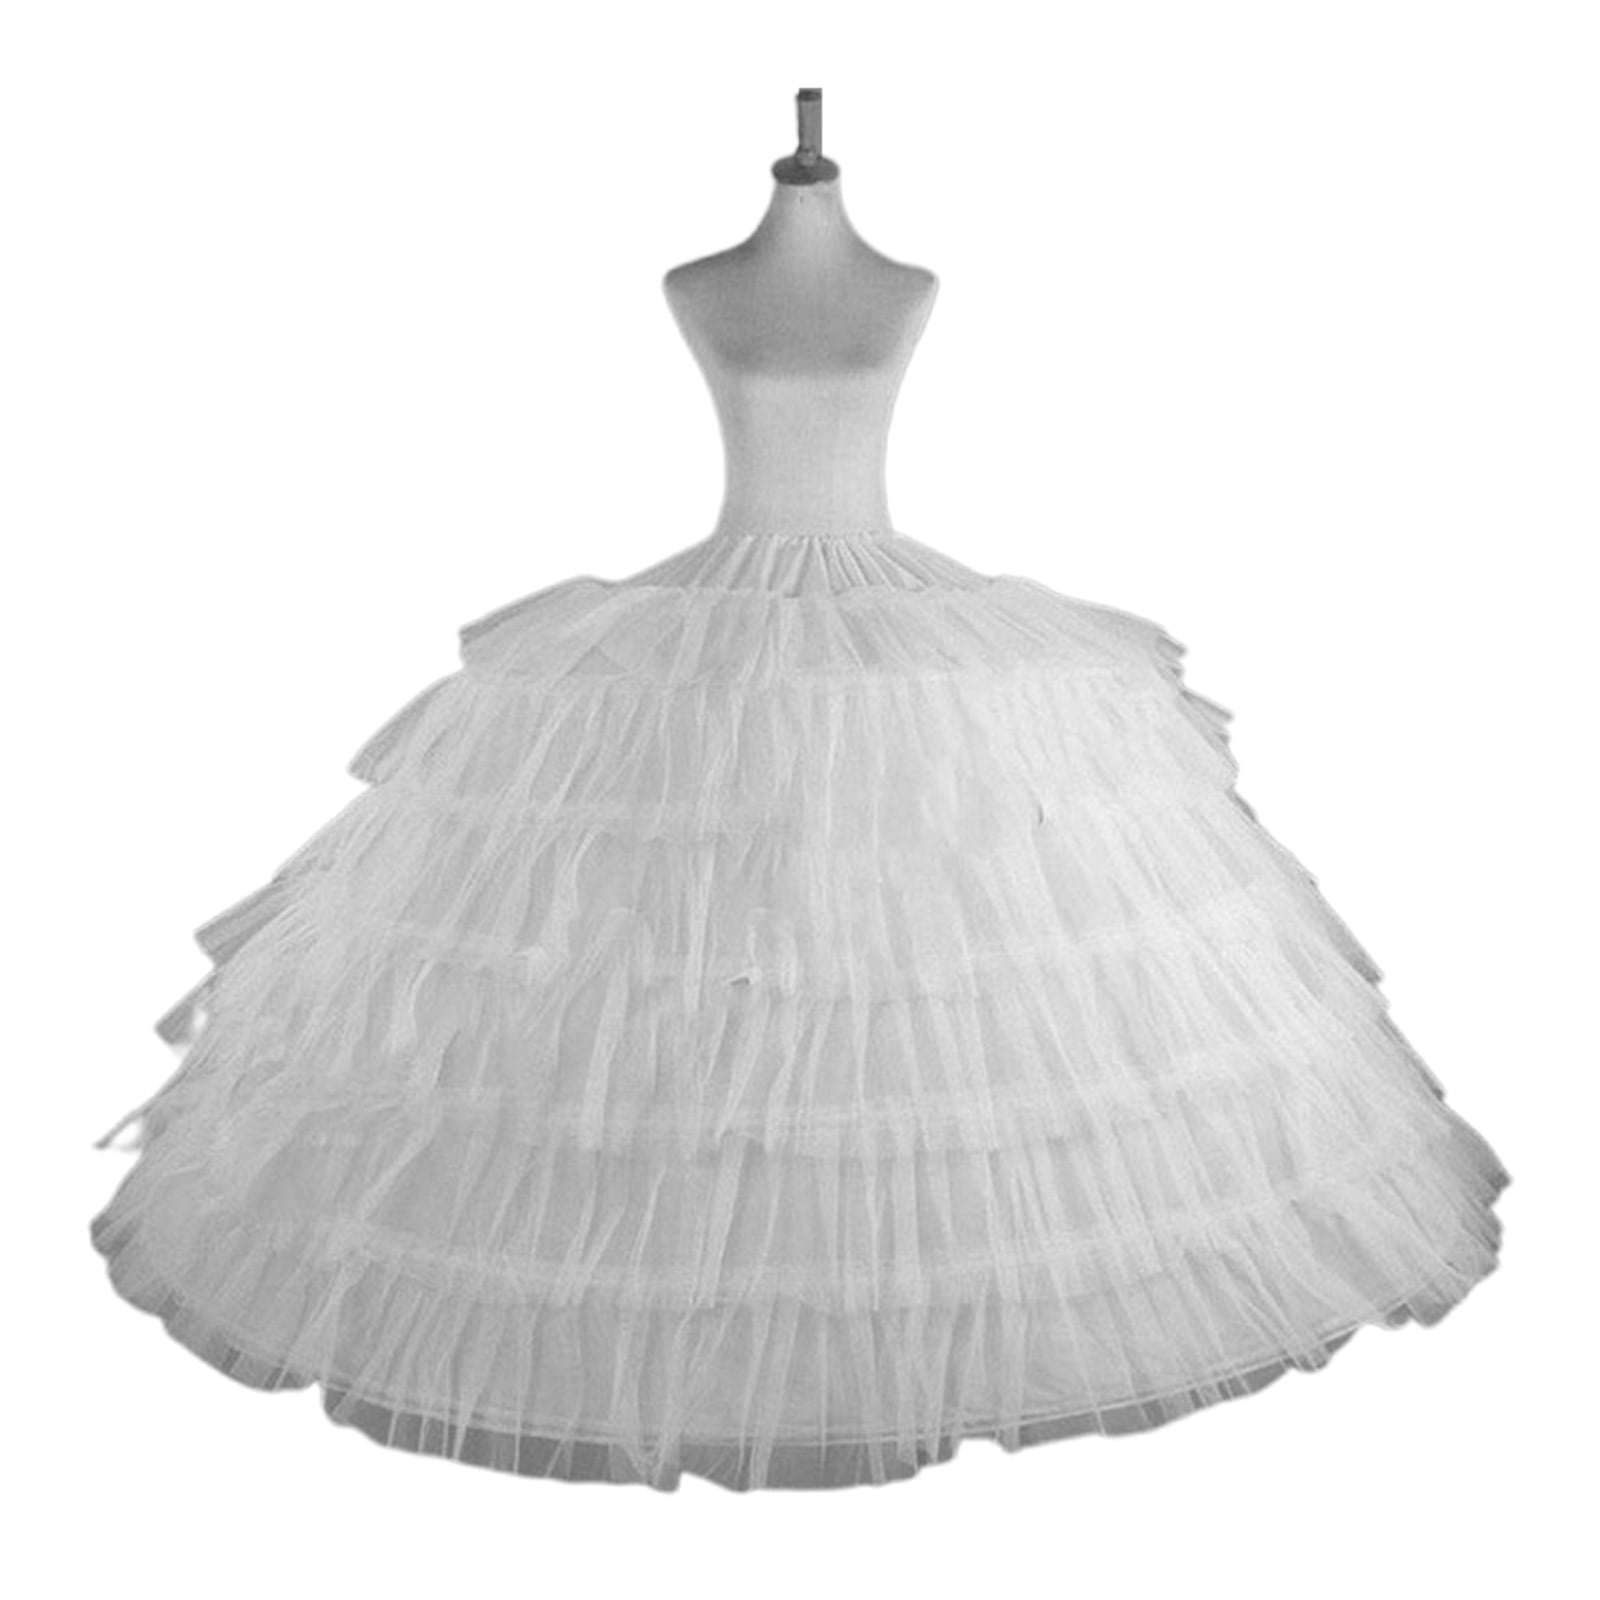 Making a Ruffly Petticoat | Petticoat pattern, Skirts for kids, Petticoat